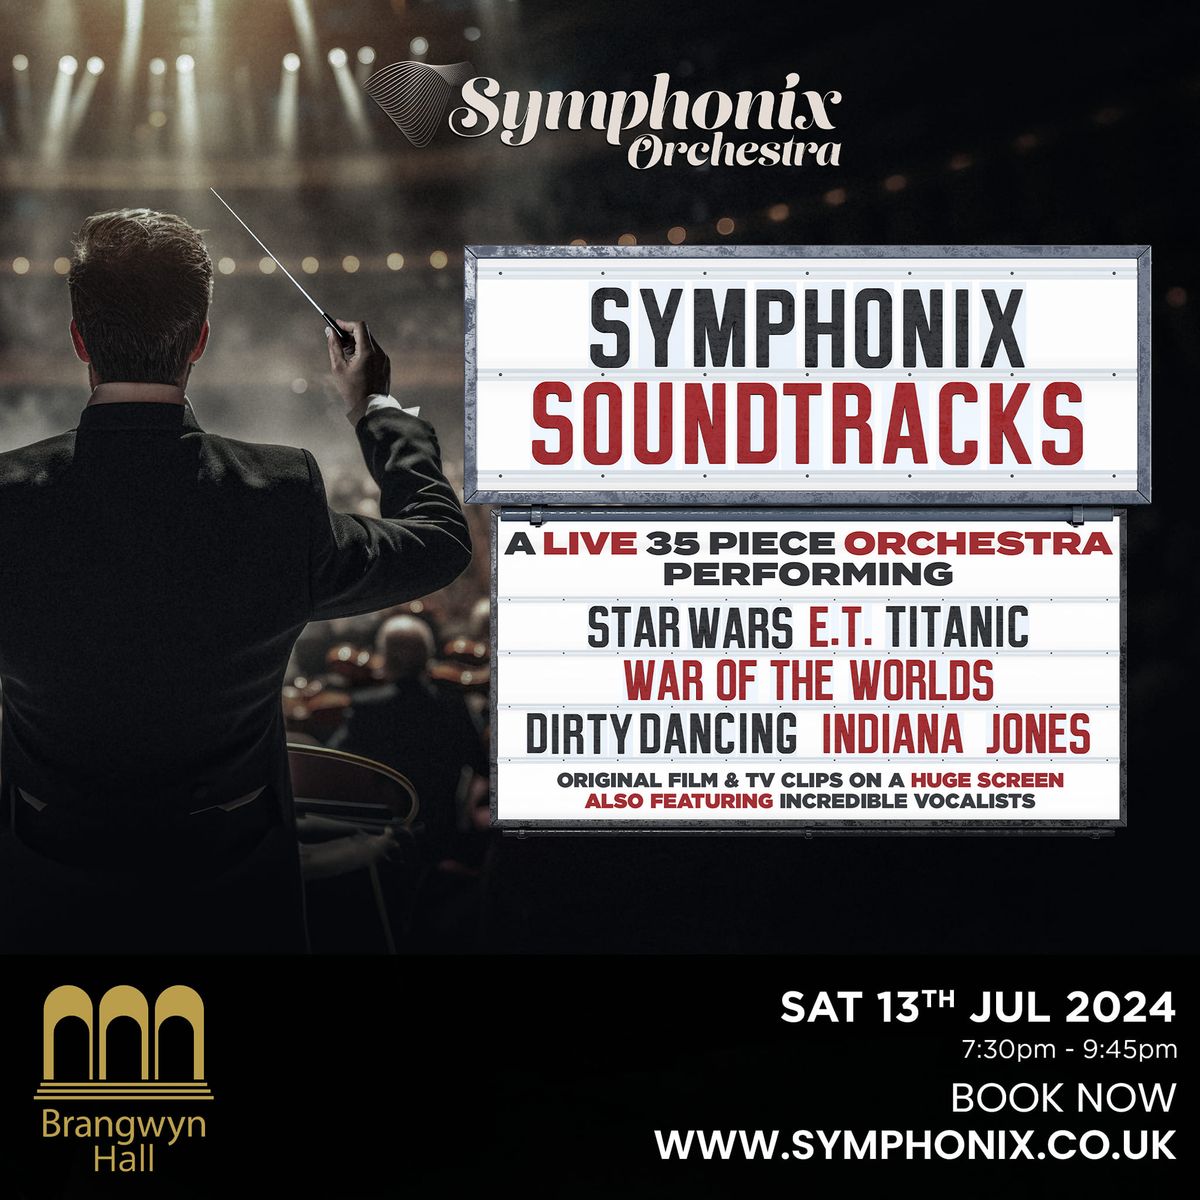 Symphonix Orchestra presents Symphonix Soundtracks at Brangwyn Hall, Swansea.